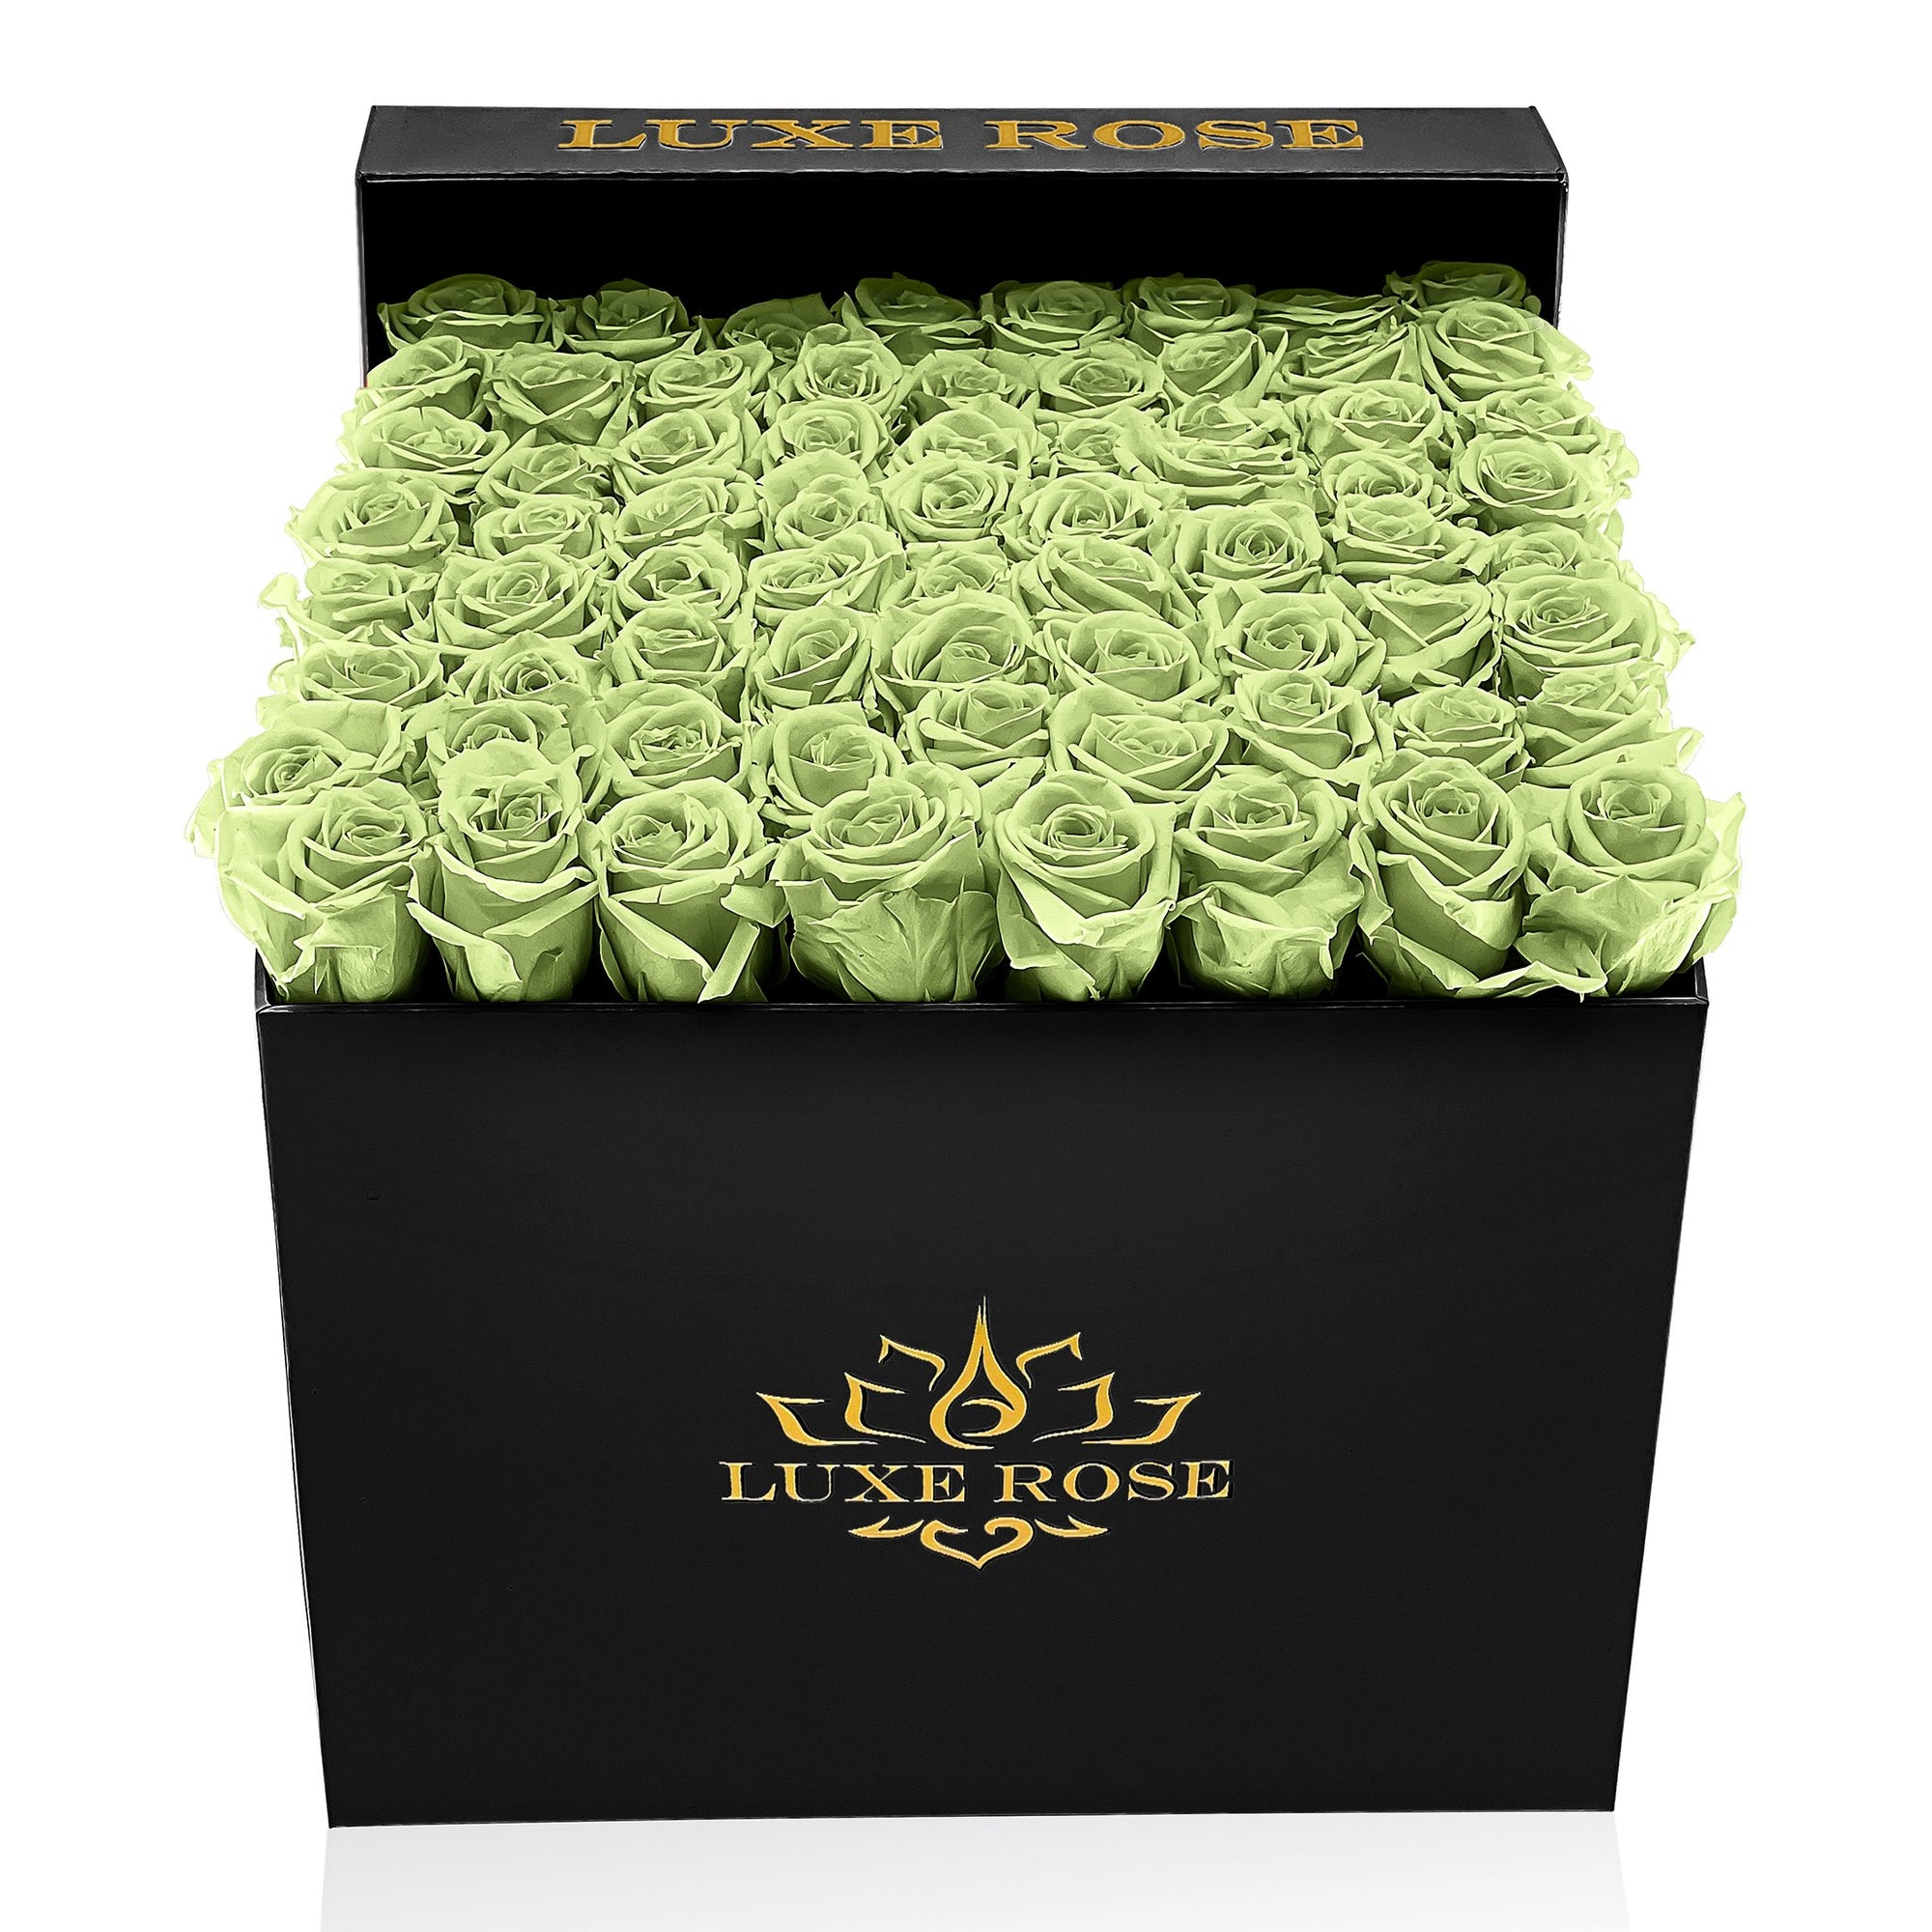 Preserved Roses Large Box | Green - White - Roses